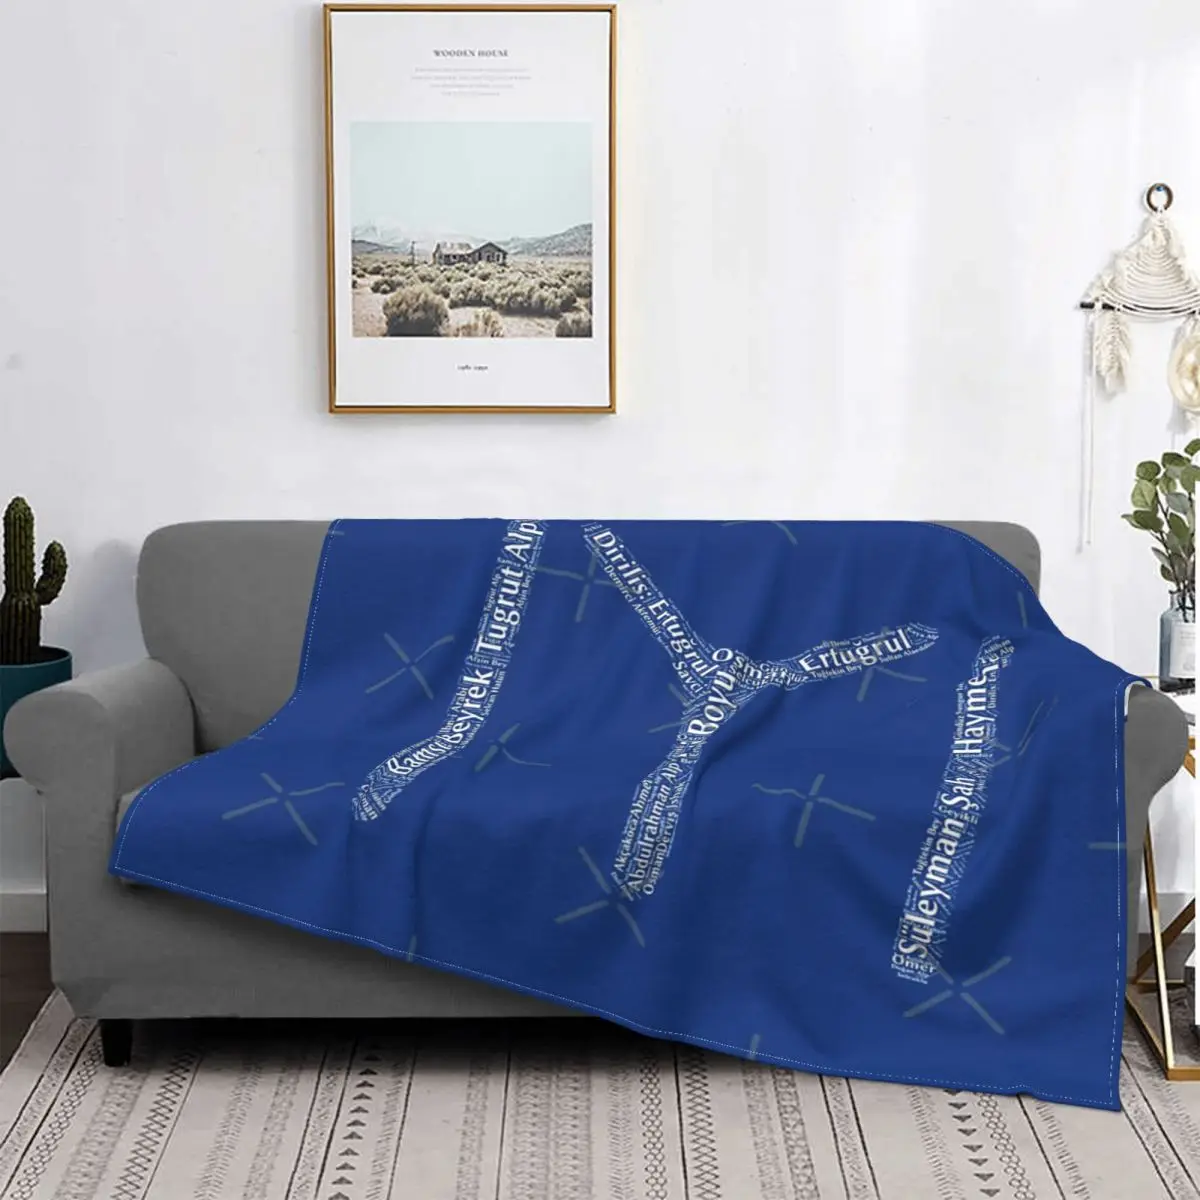 

Adrilis Ertugrul-Manta de arte con palabras, colcha a cuadros para cama, manta térmica para bebé, fundas para cama de invierno